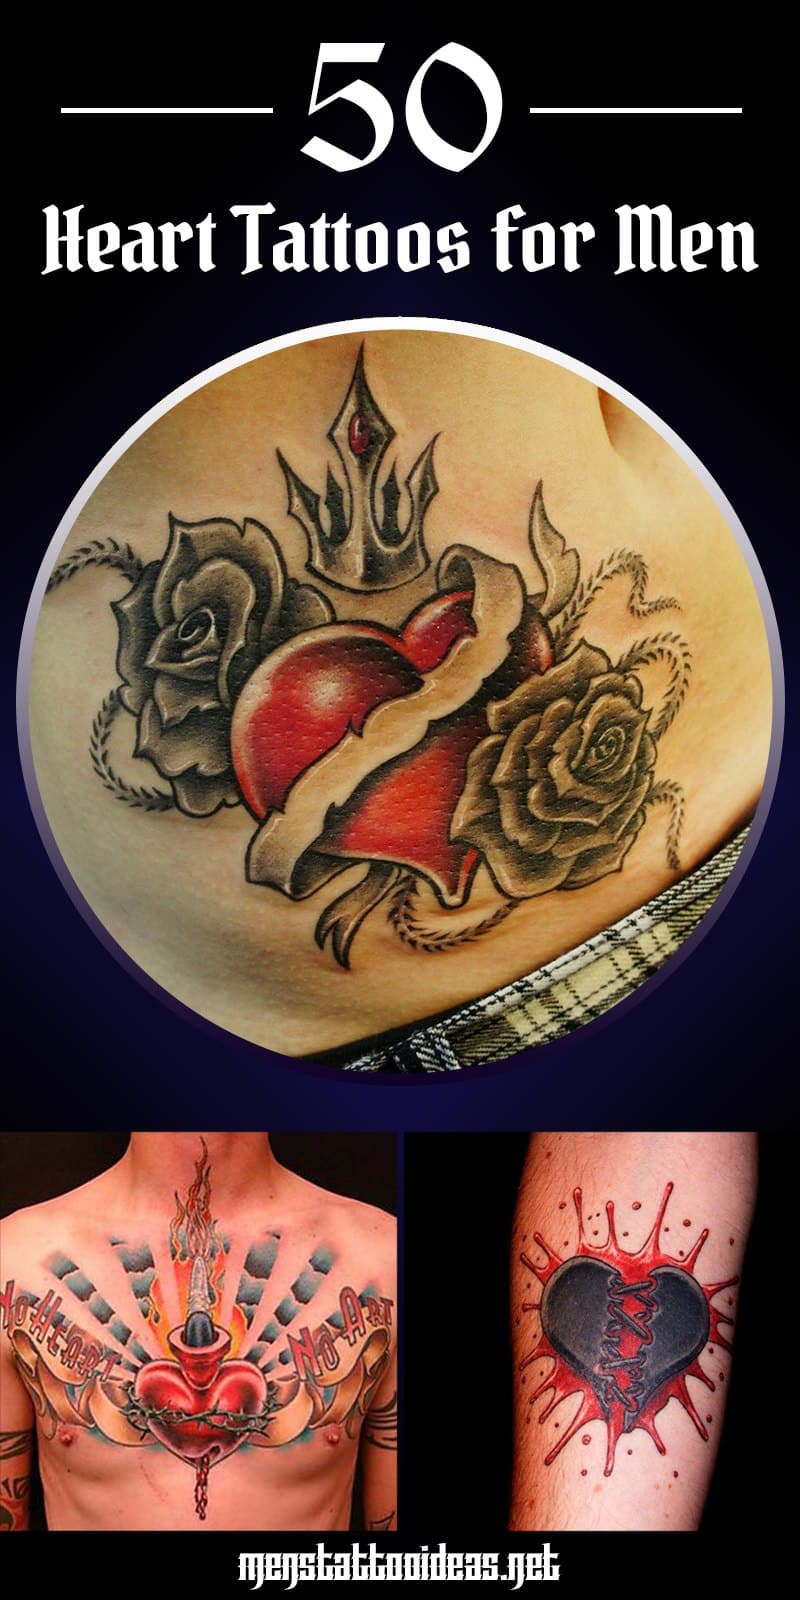 Heart tattoo ideas